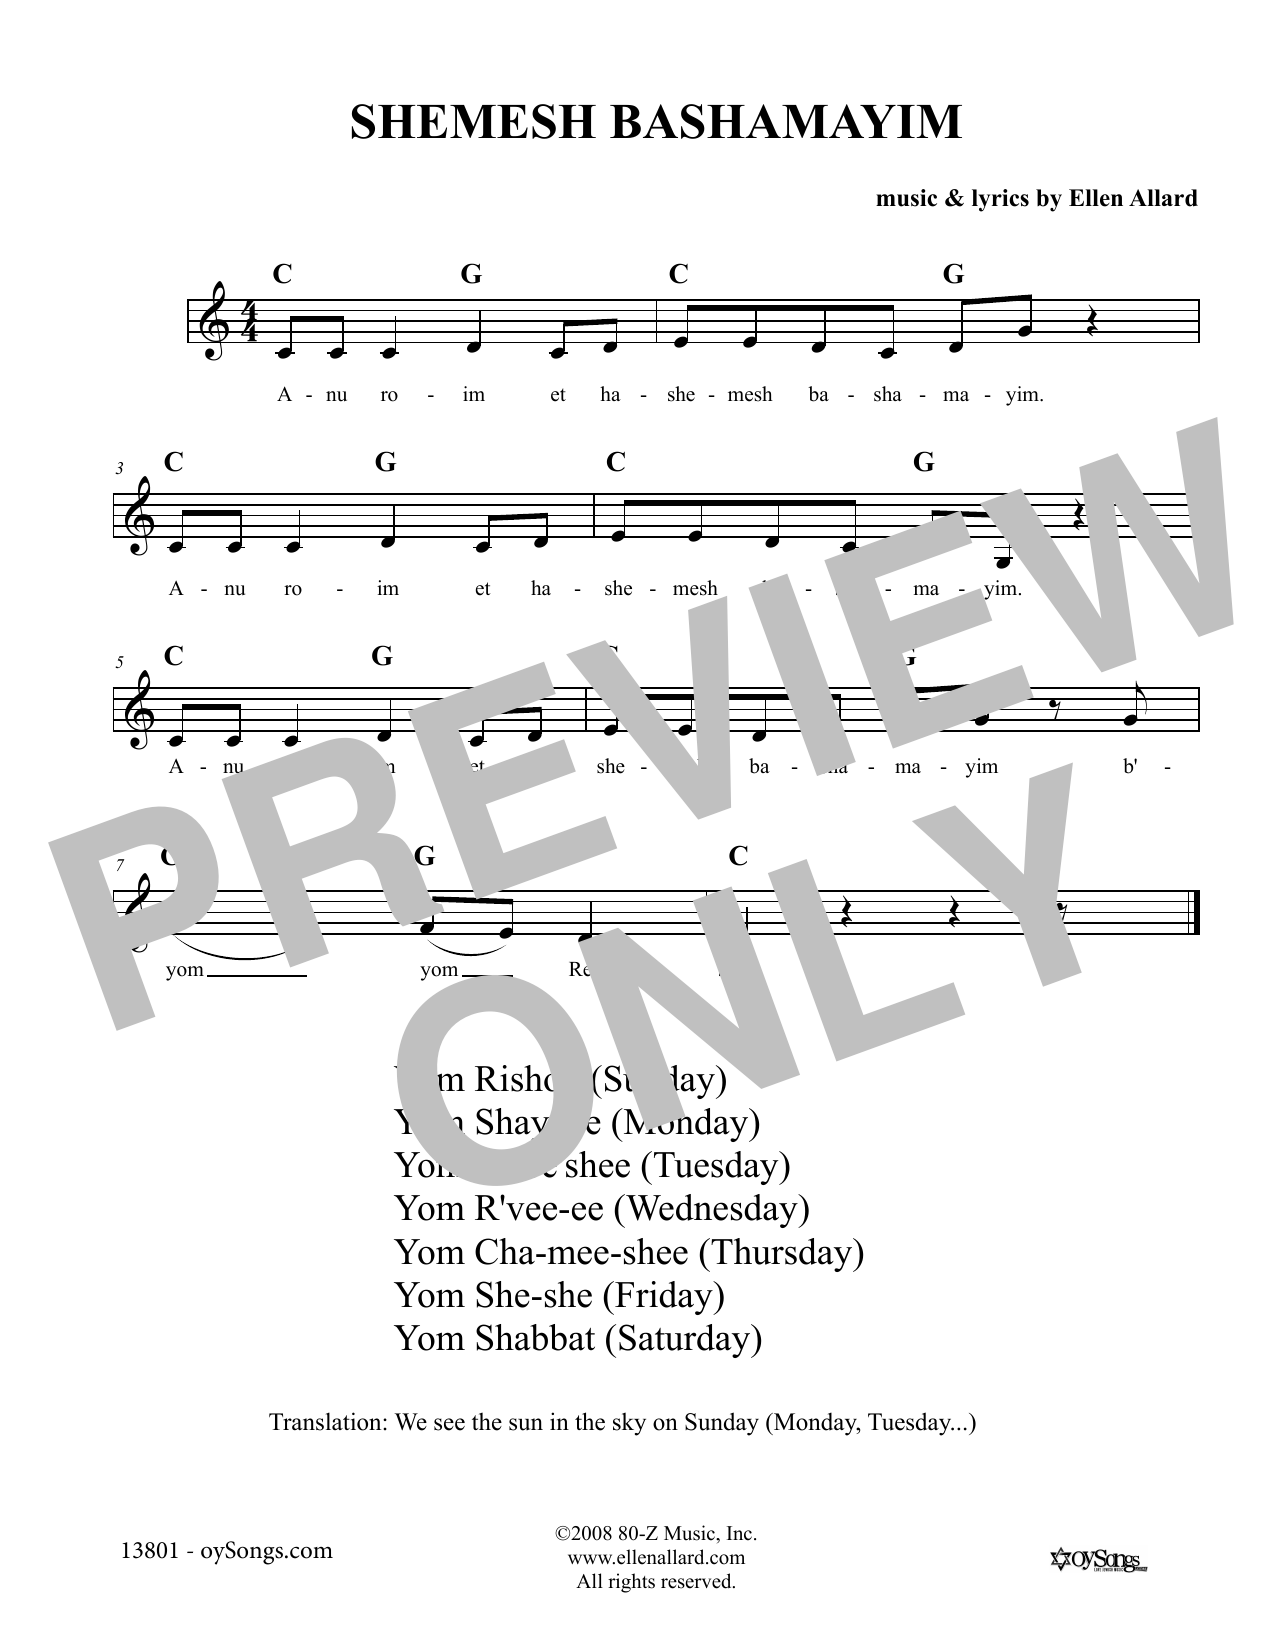 Download Ellen Allard Shemesh Bashamayim Sheet Music and learn how to play Melody Line, Lyrics & Chords PDF digital score in minutes